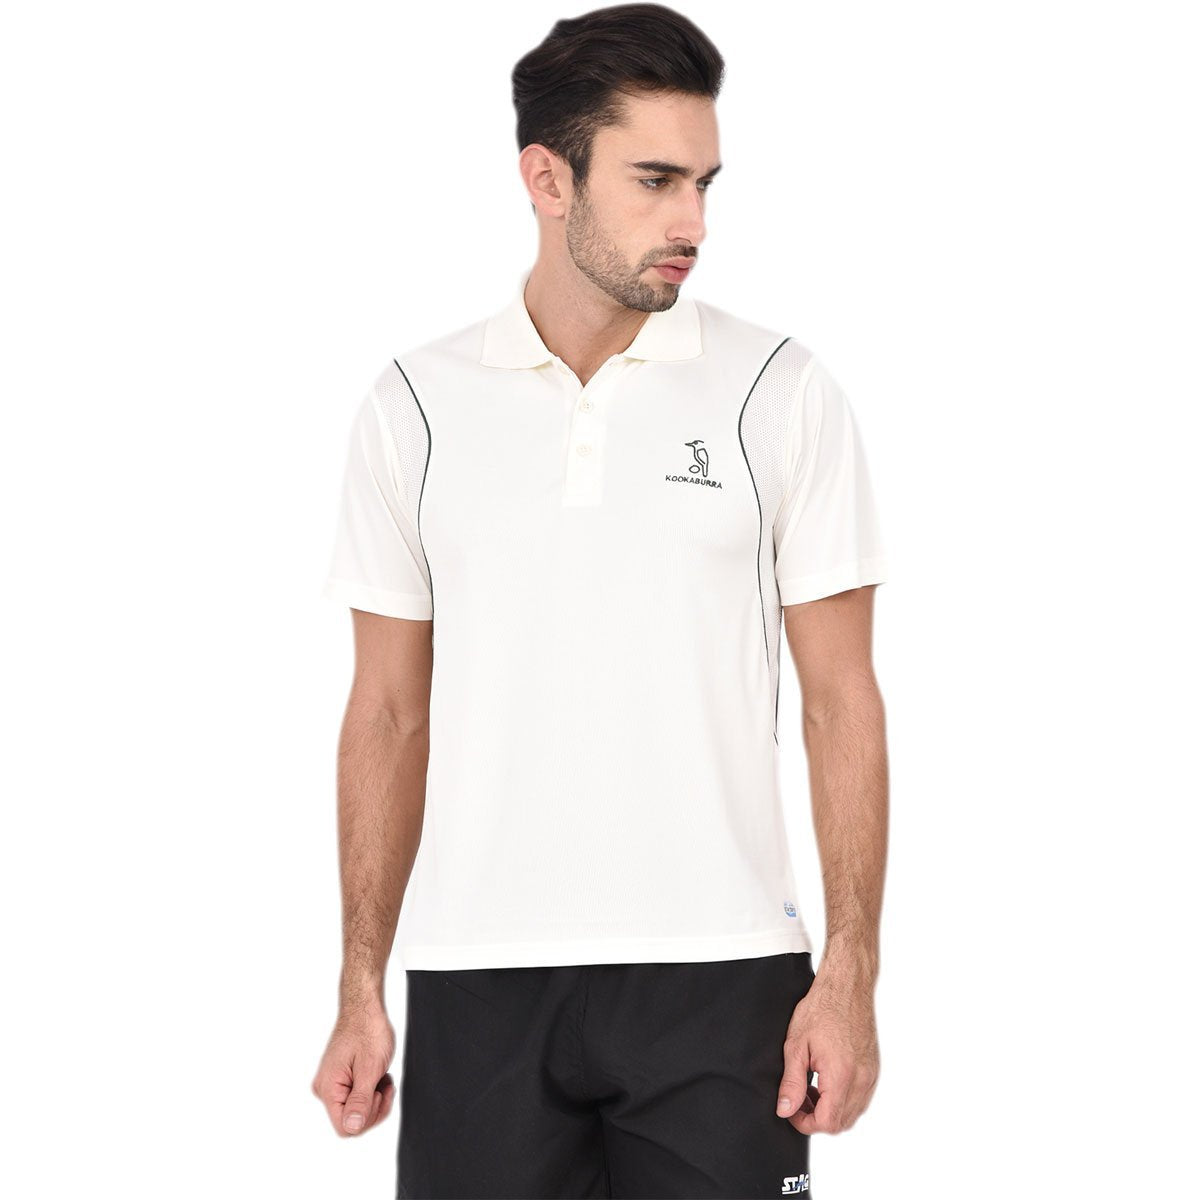 Kookaburra Cricket T-Shirt Half Sleeve, White - Best Price online Prokicksports.com